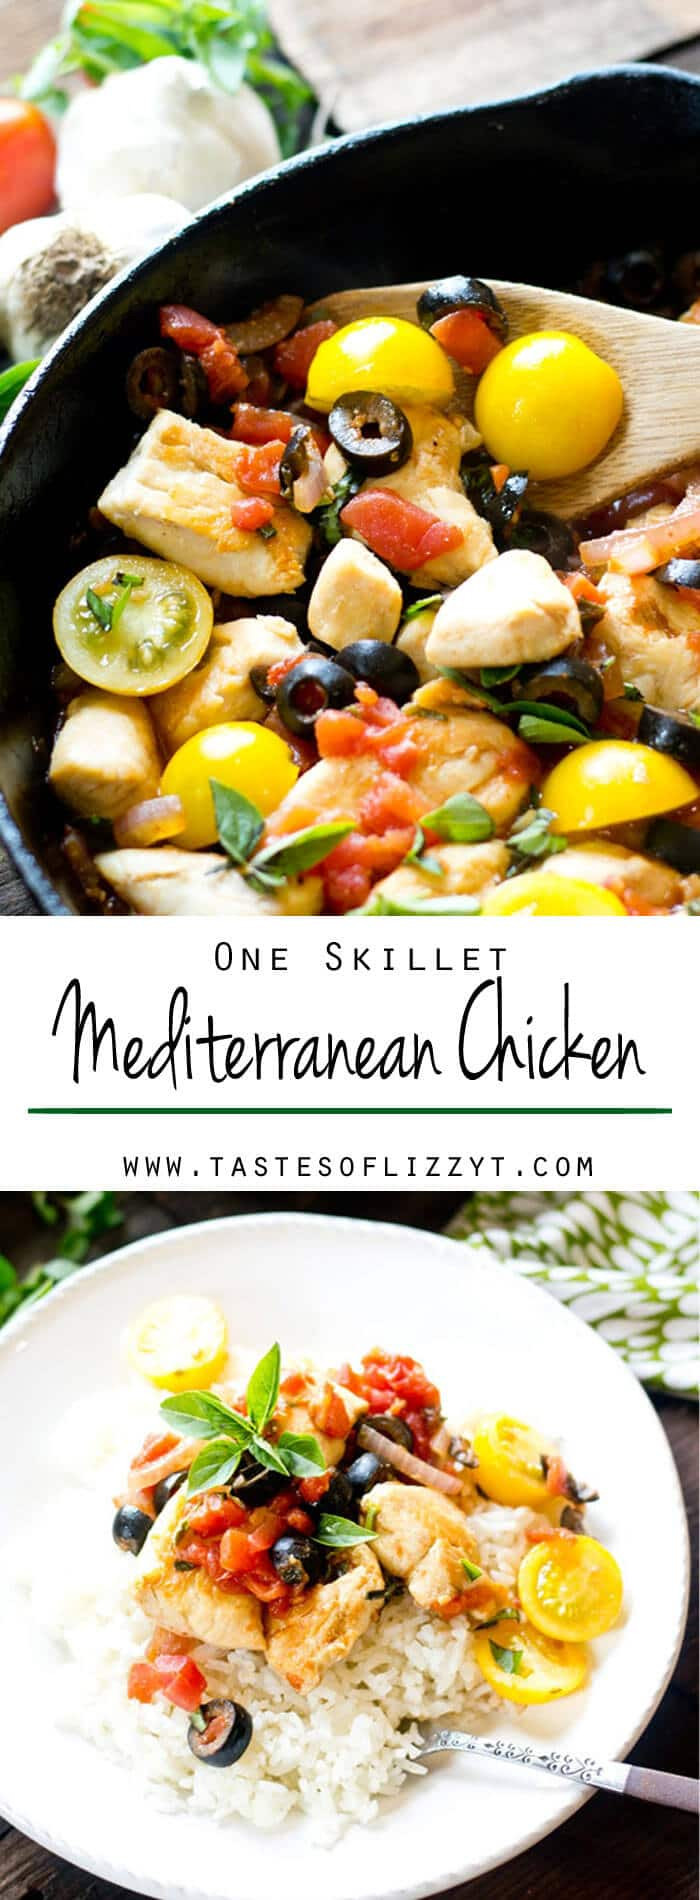 Mediterranean Dinner Recipes
 Mediterranean Chicken e Skillet Healthy Easy Dinner in